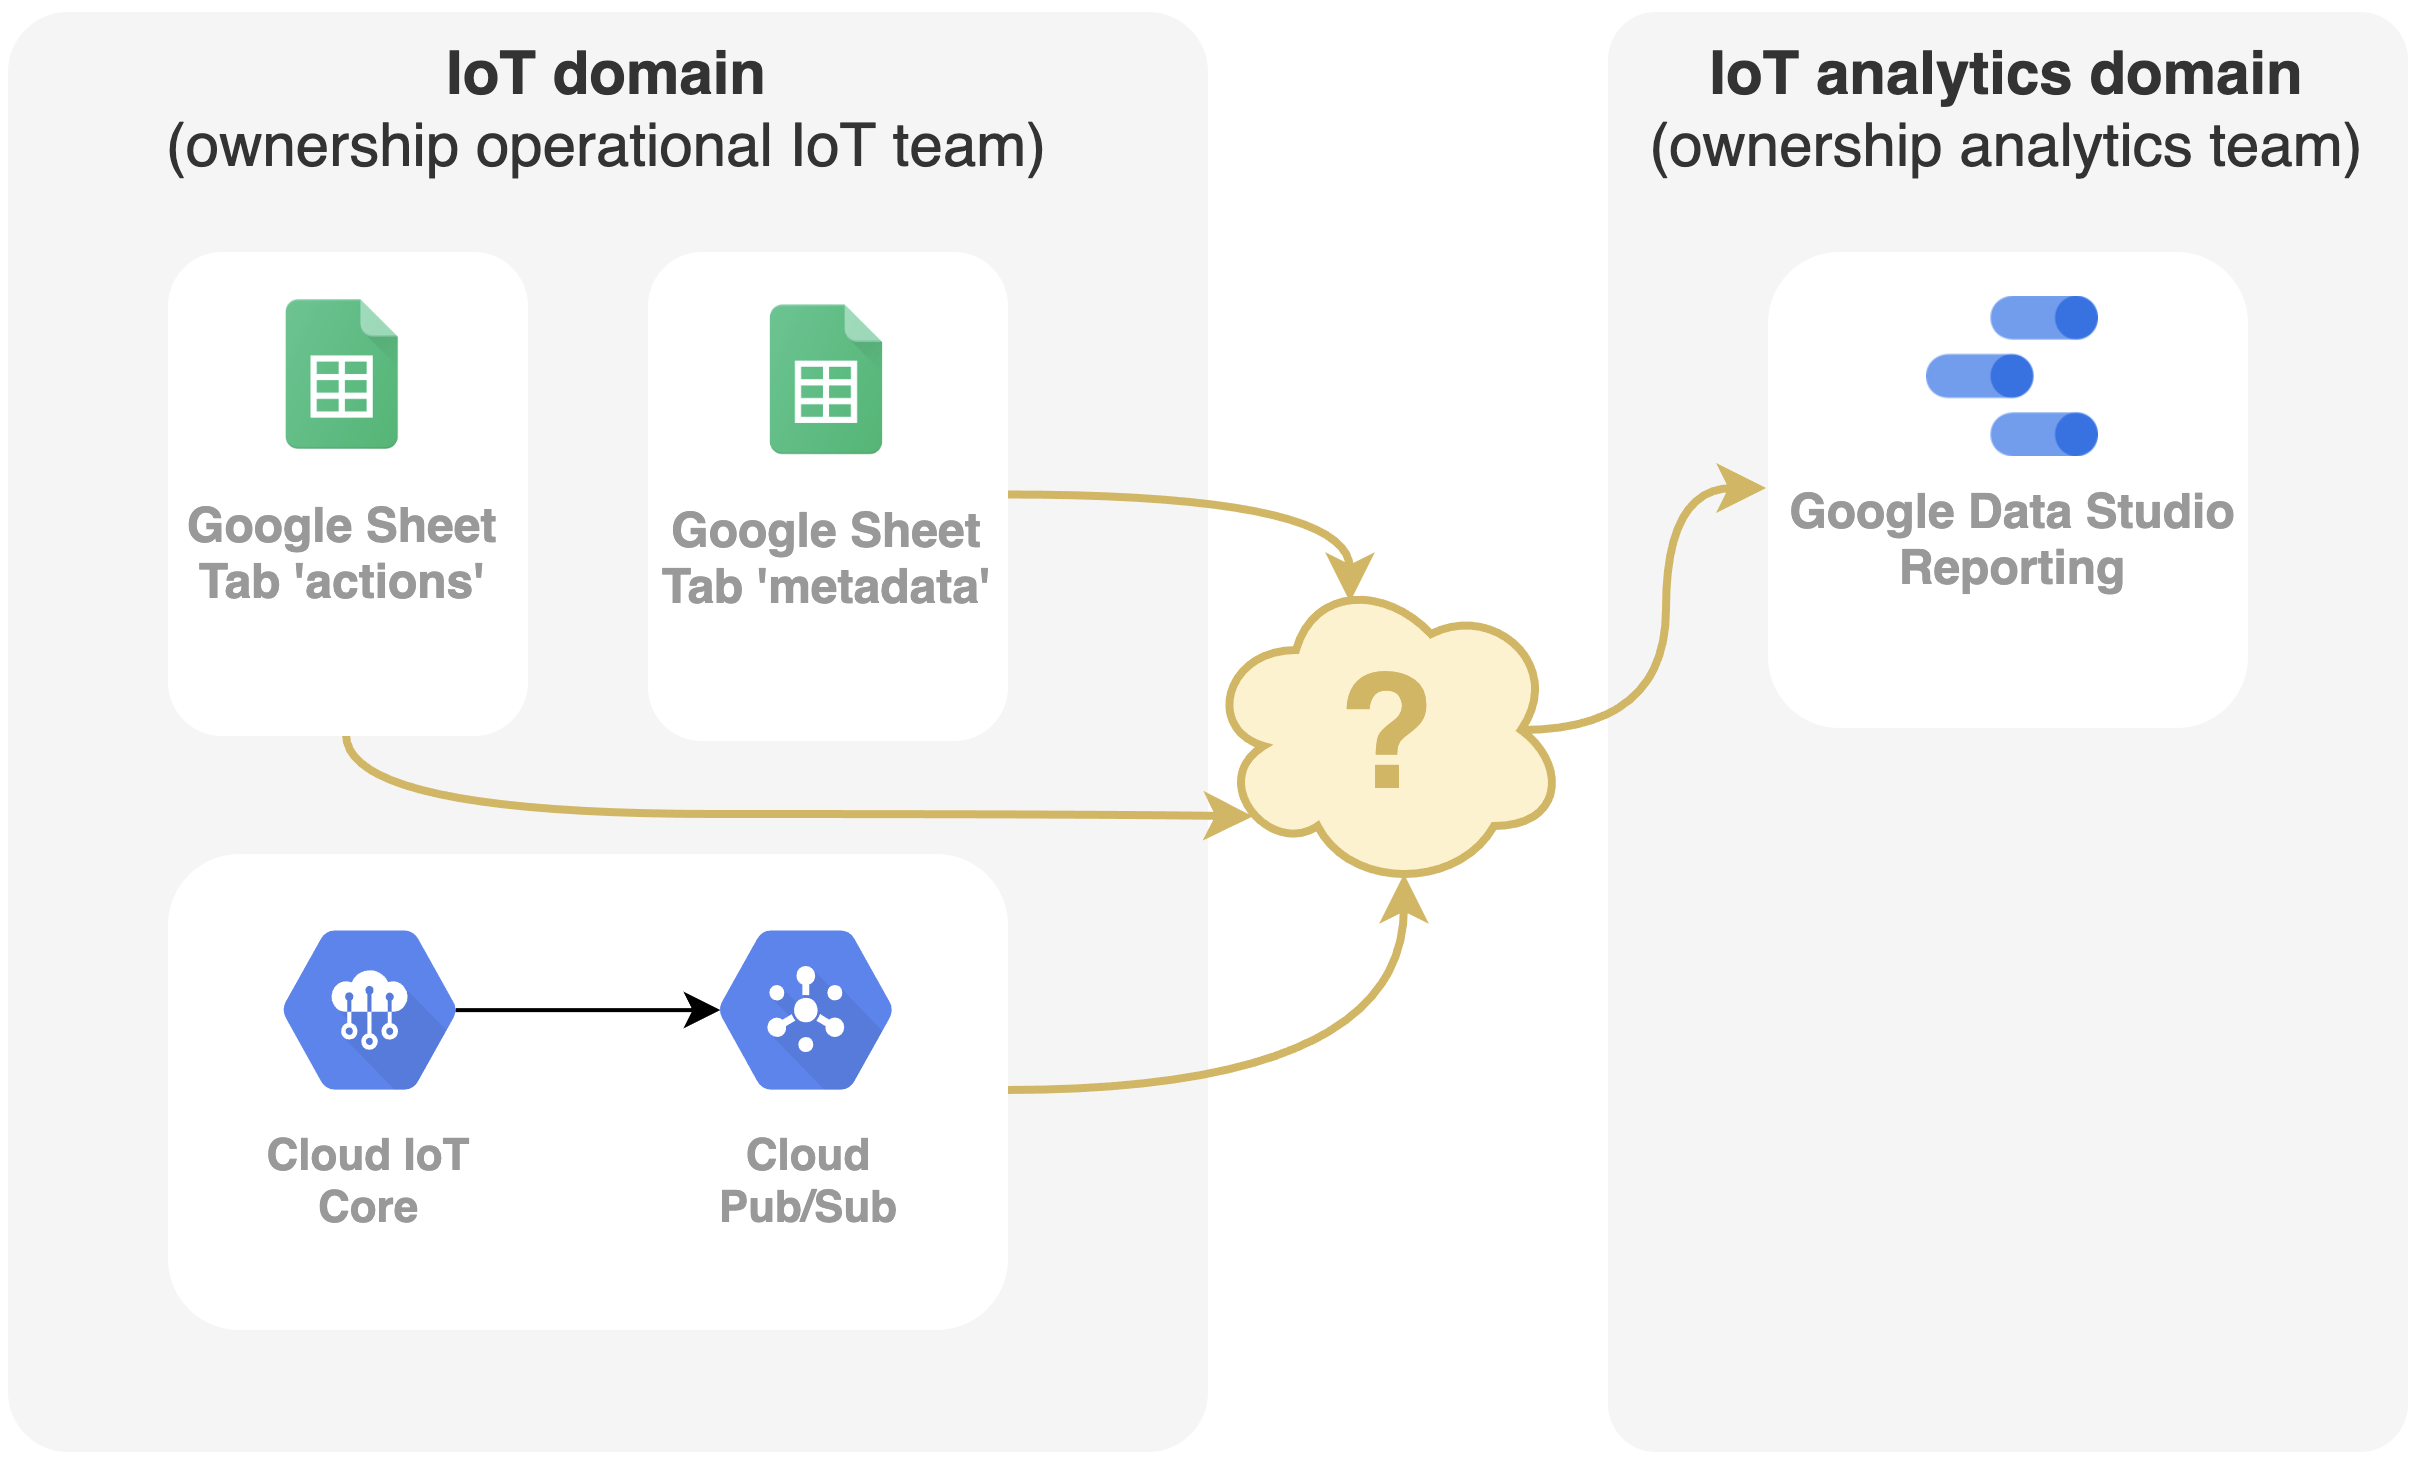 Schema illustrating IoT domain